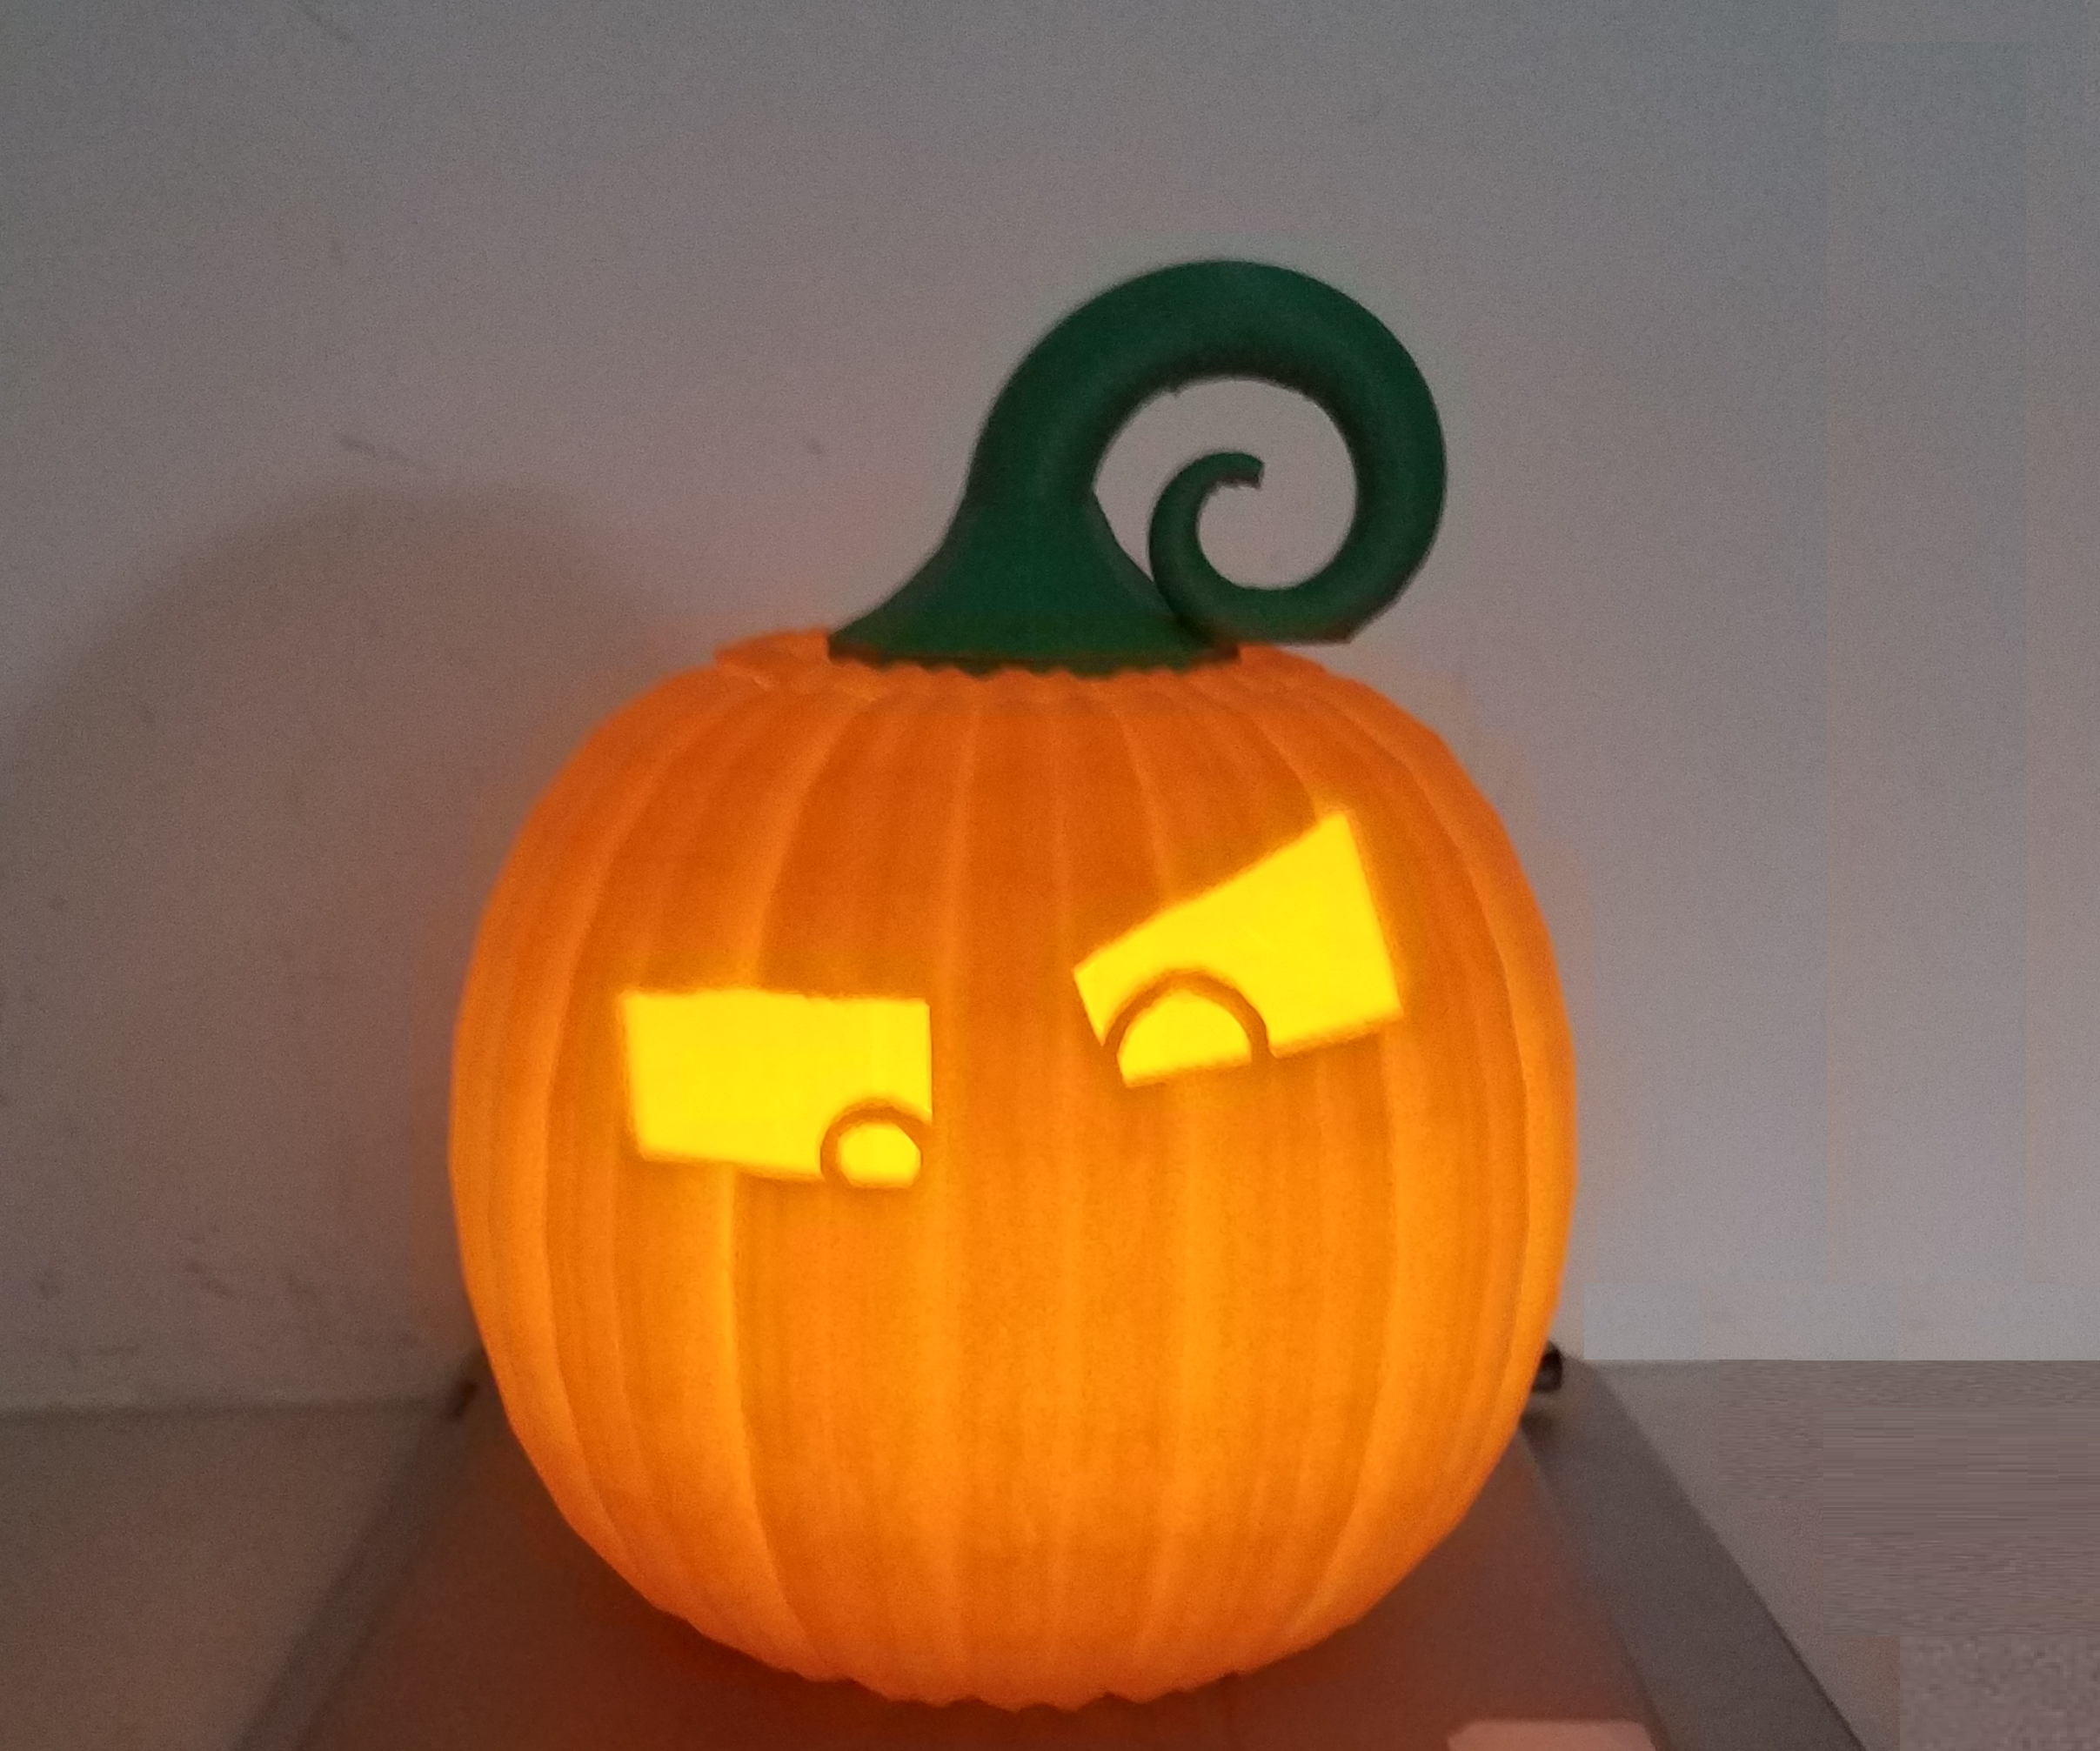 3D Printed Pumpkin Using Tinkercad